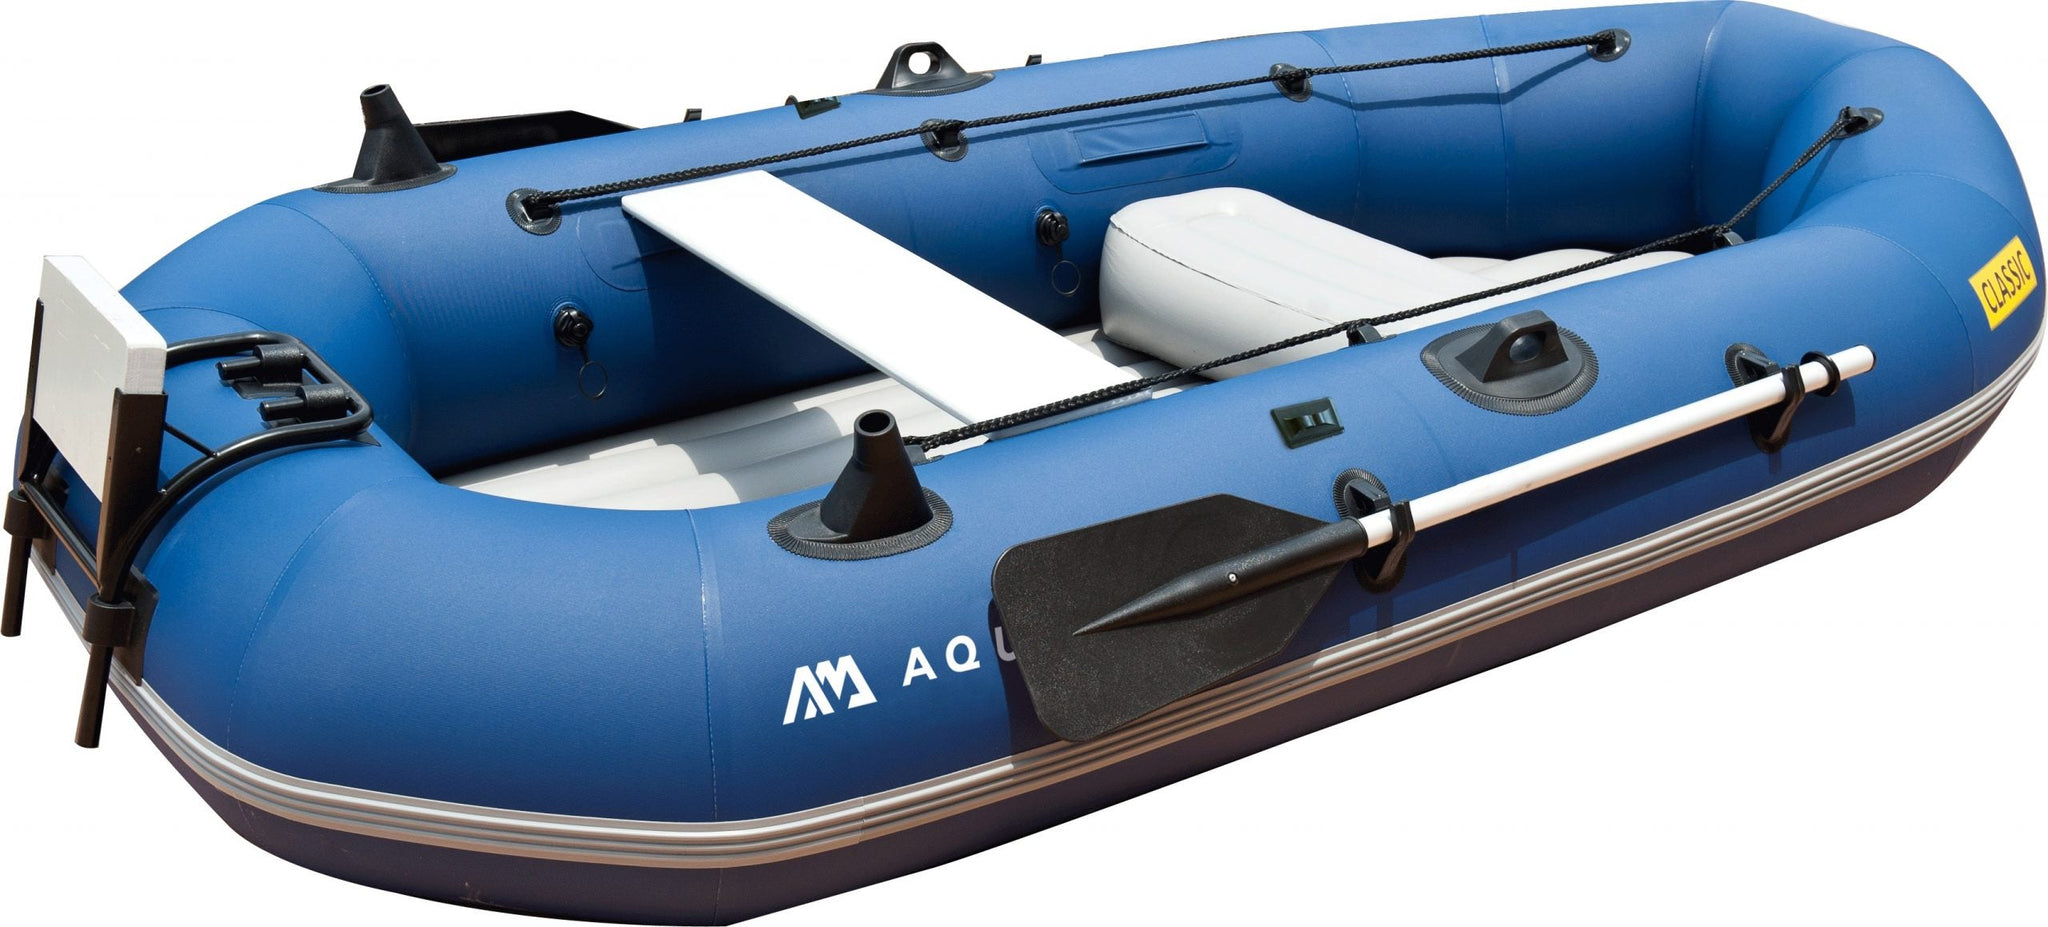 Aqua Marina Classic Boat With Trolling Motor – marineinflatables